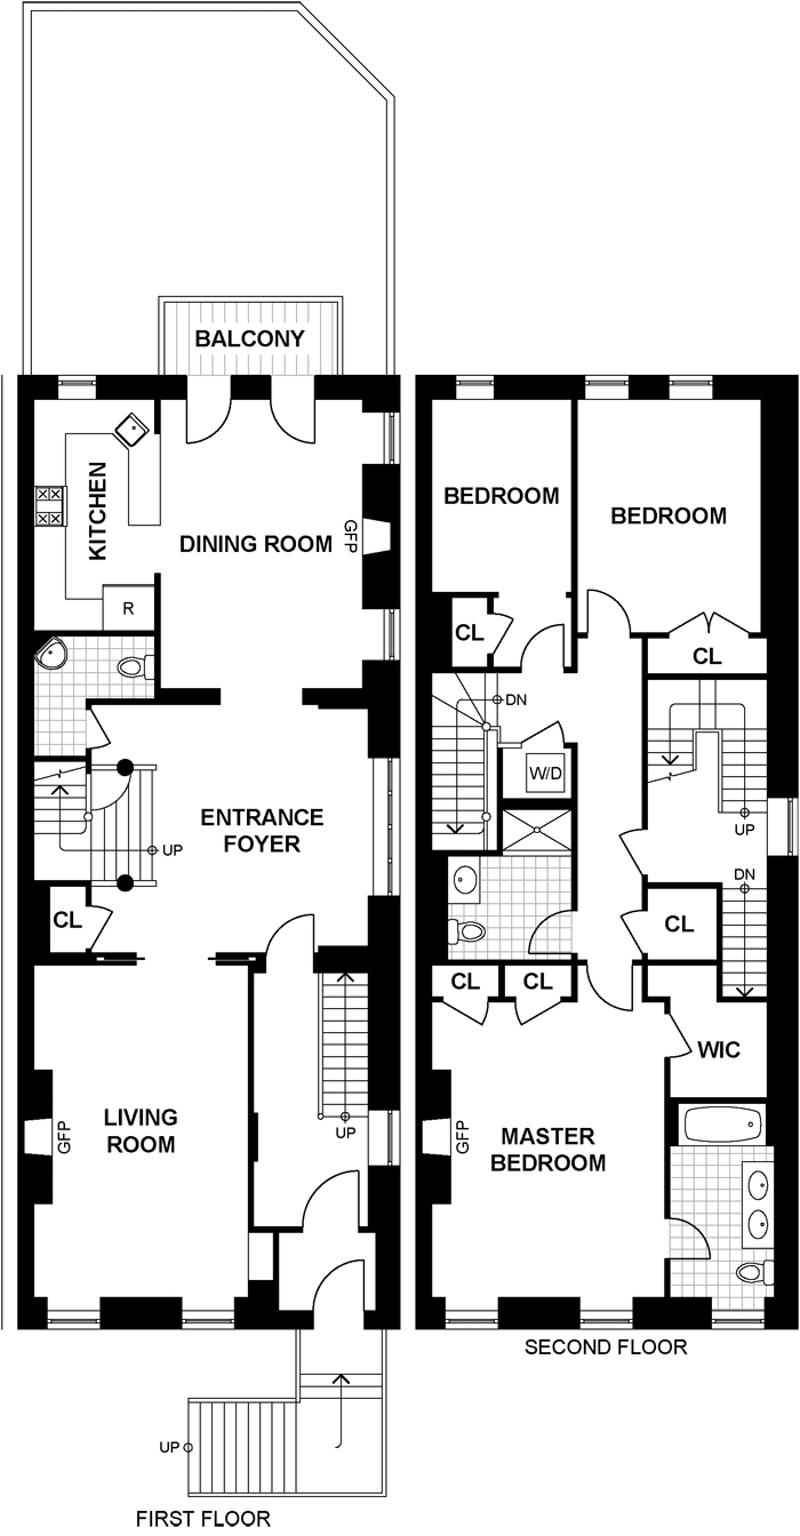 Floorplan for 214 West 138th Street, 2